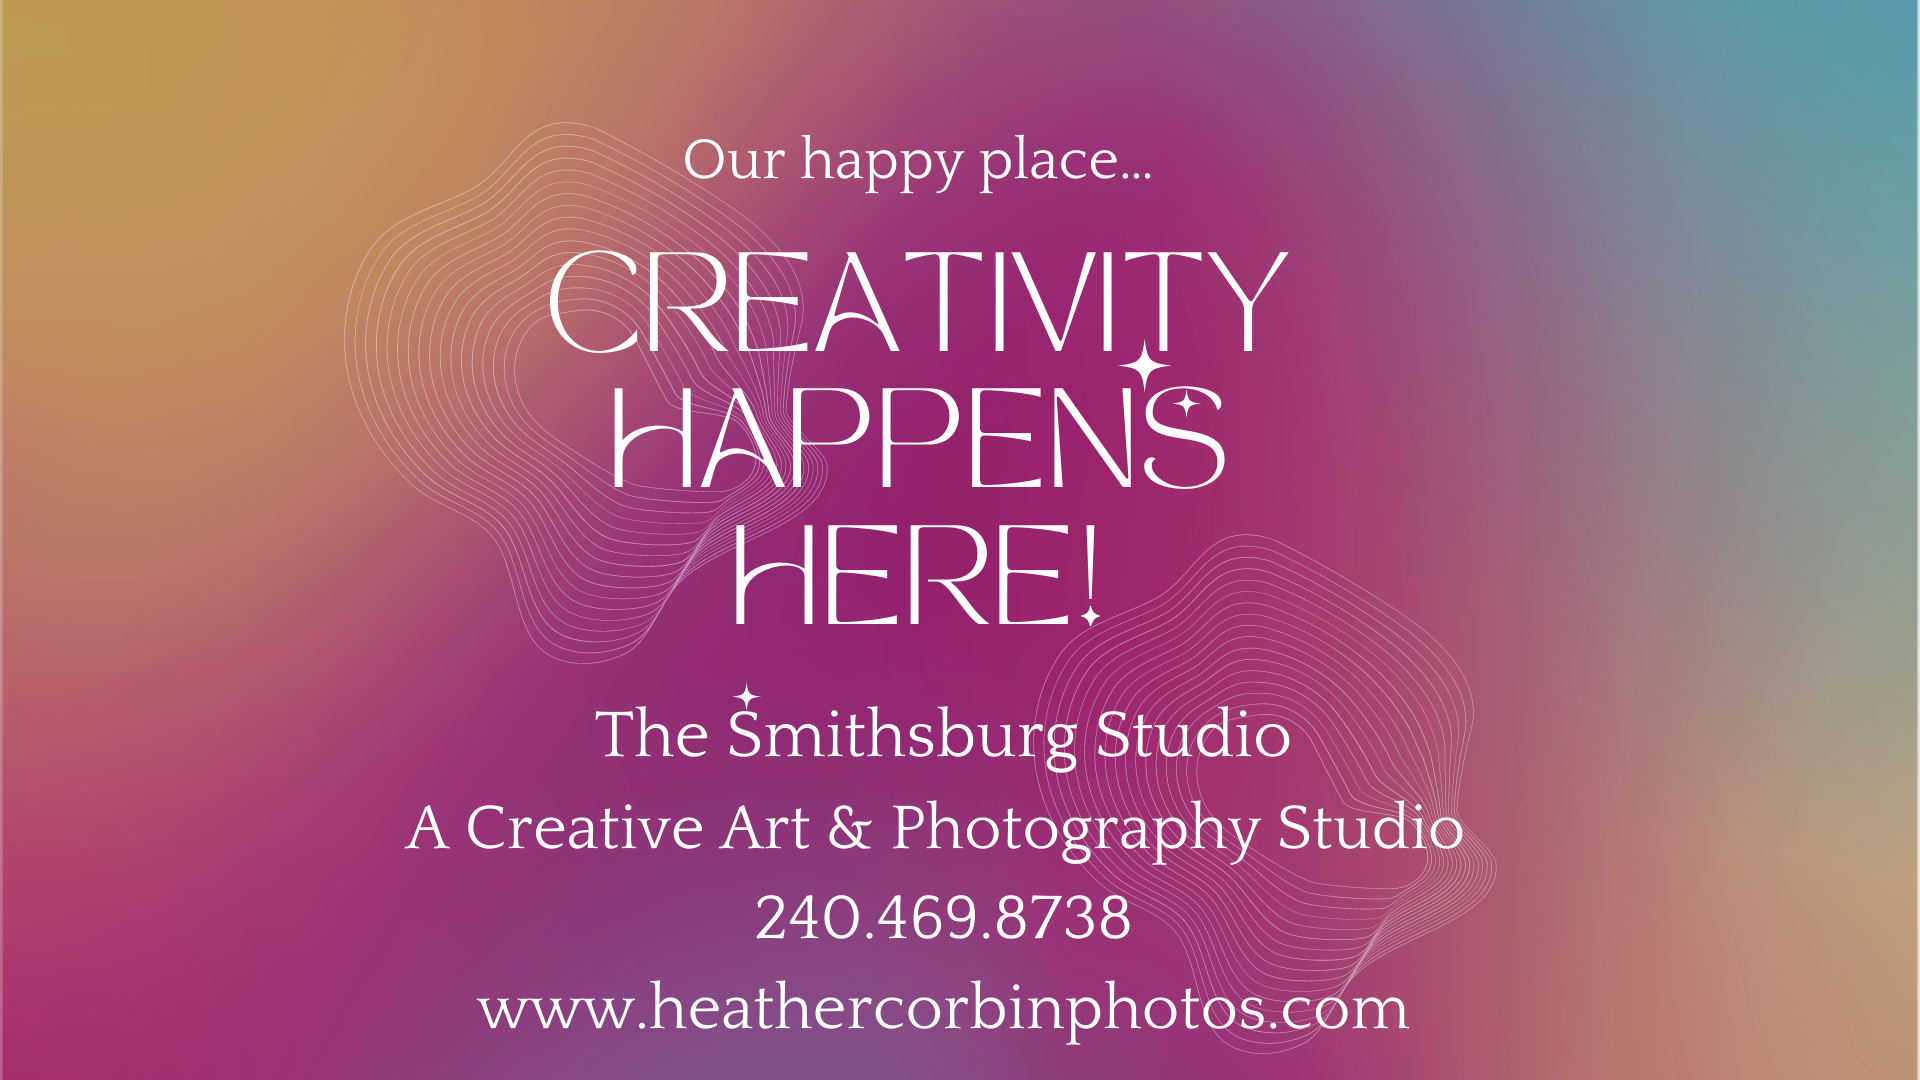 The Smithsburg Studio logo